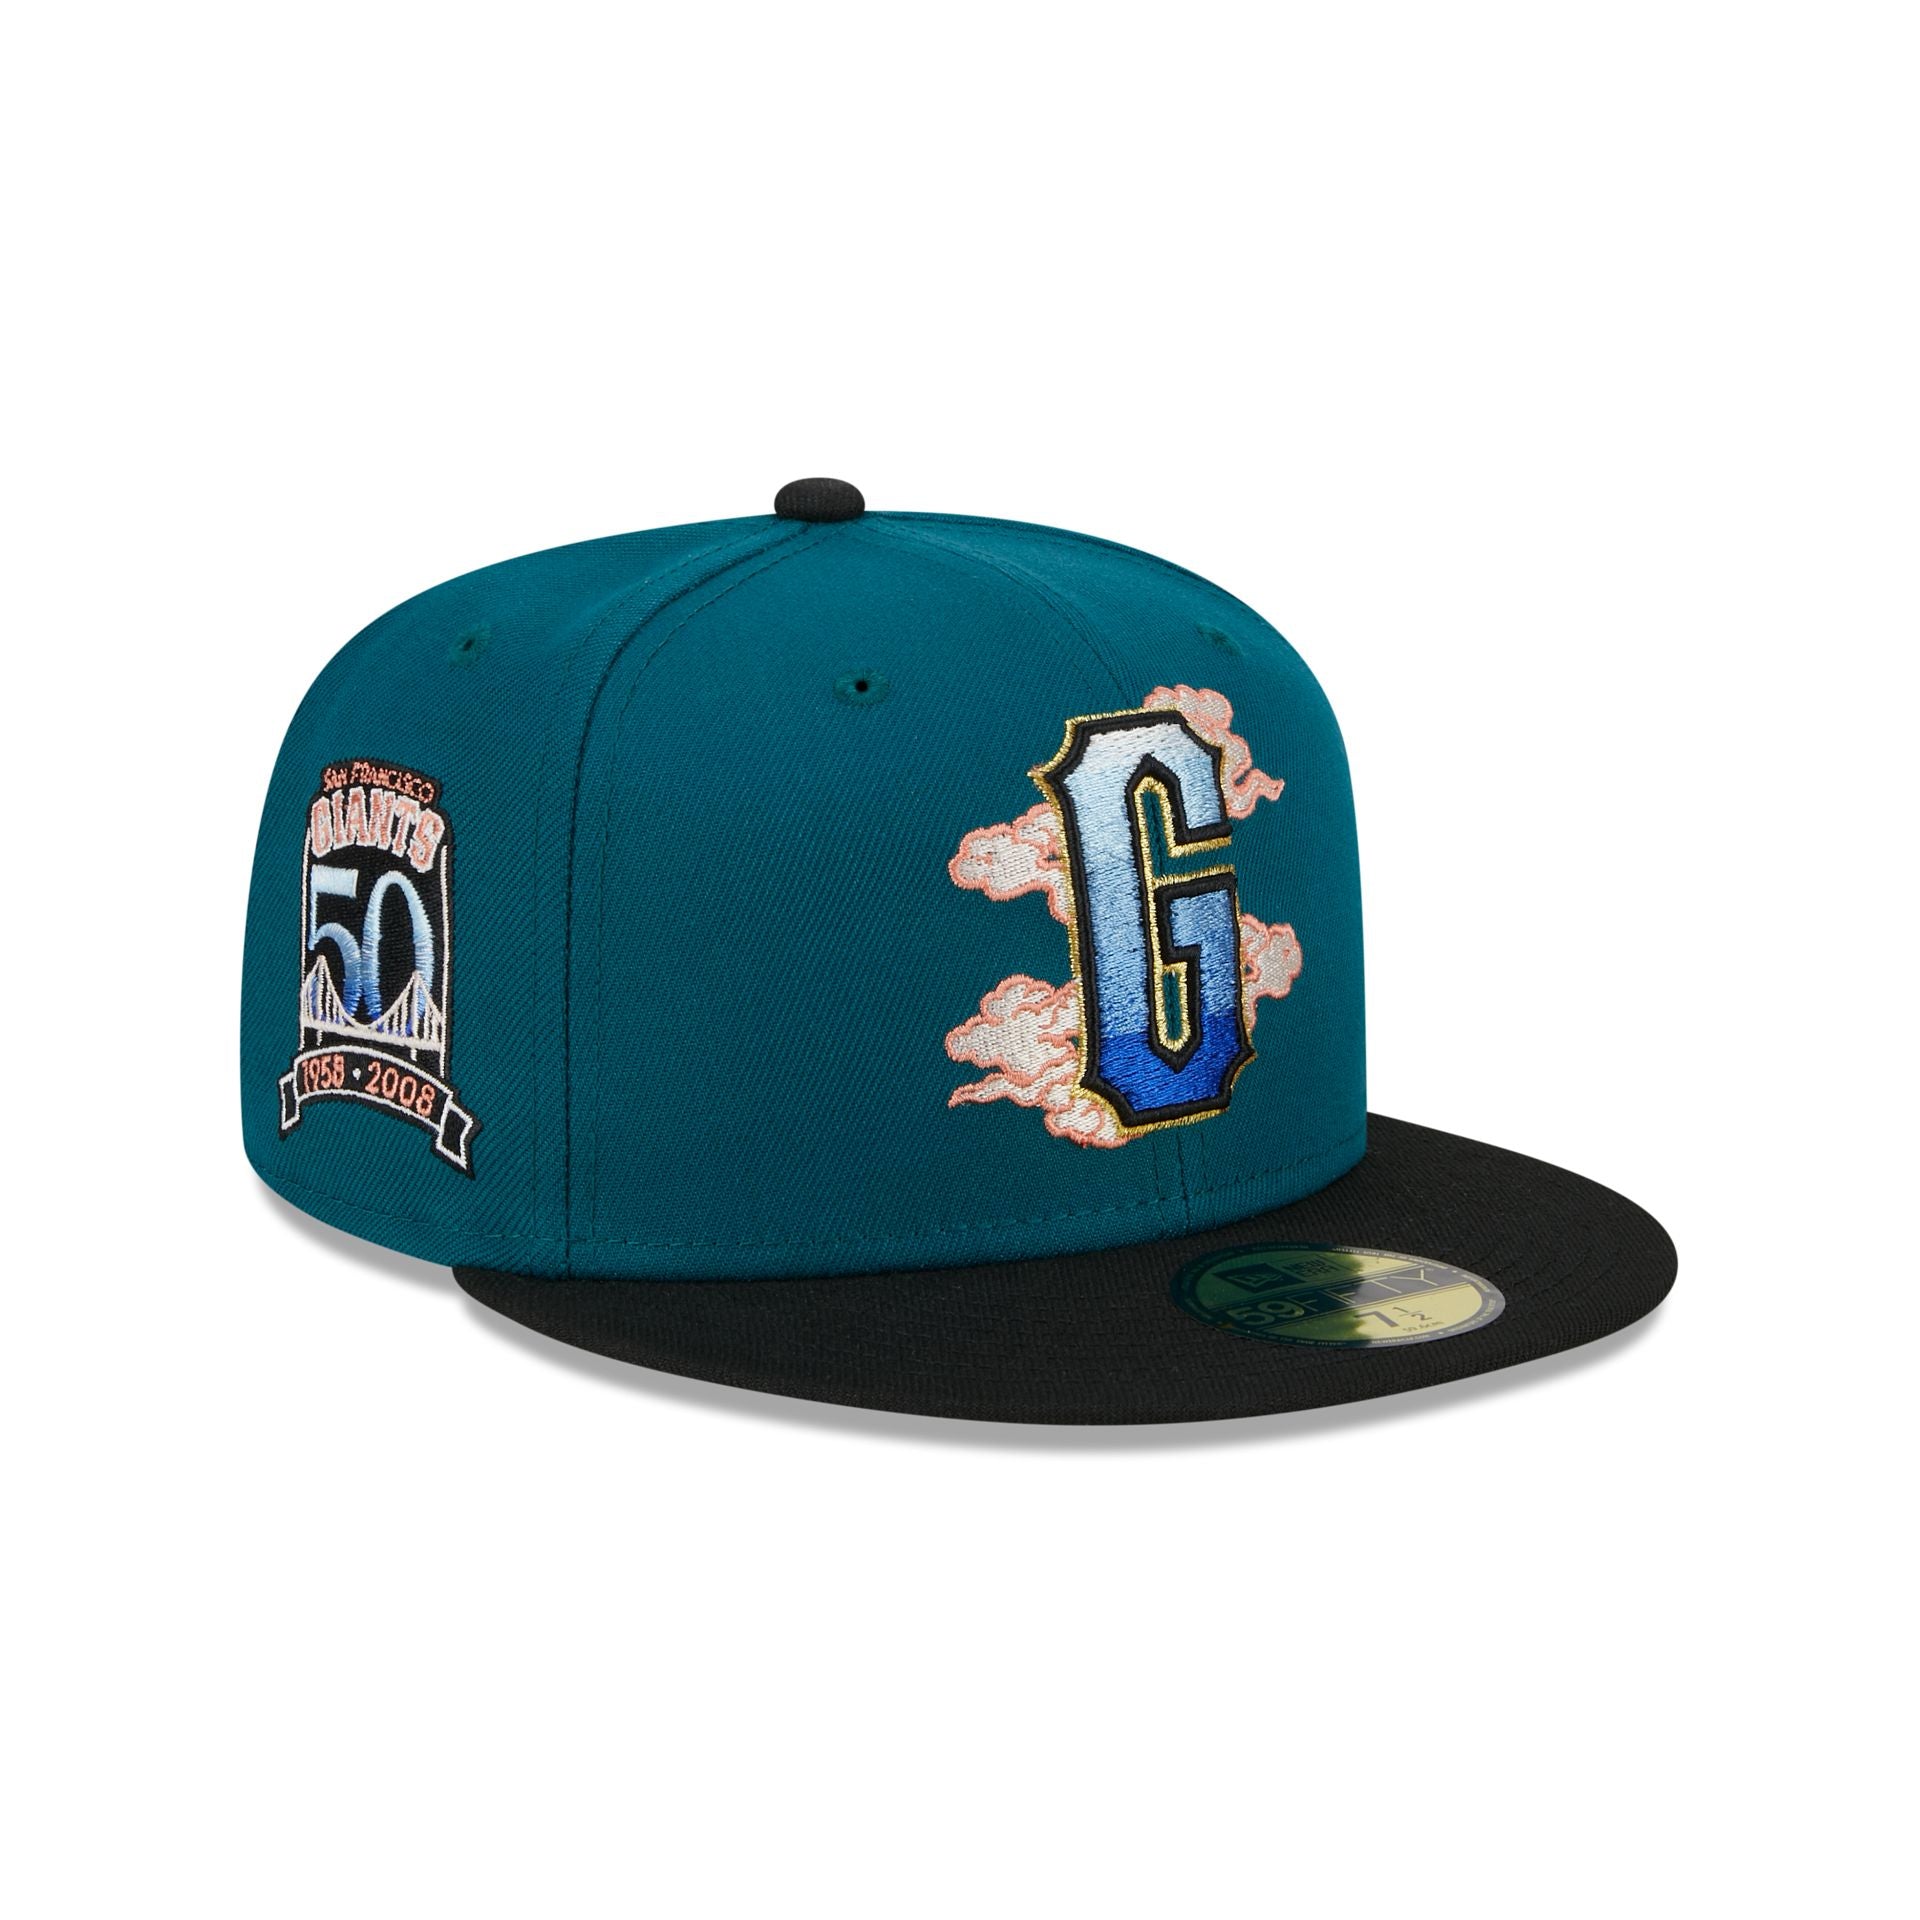 Lids New York Knicks Era Elements Tonal 59FIFTY Fitted Hat - Blue